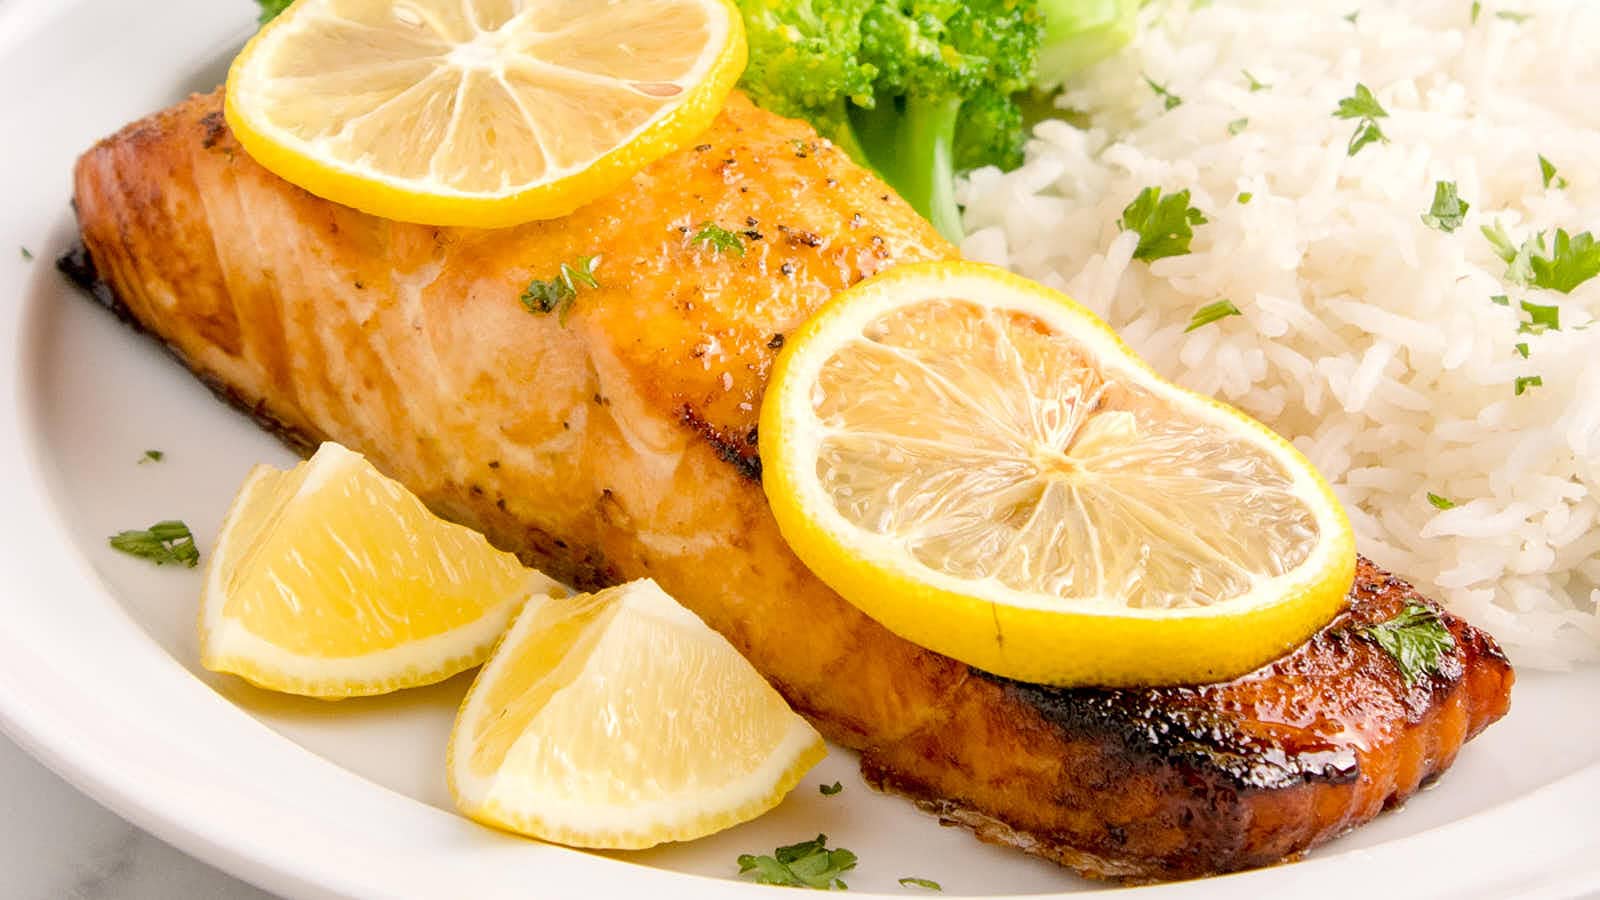 Air Fryer Lemon Pepper Salmon recipe by Cheerful Cook.